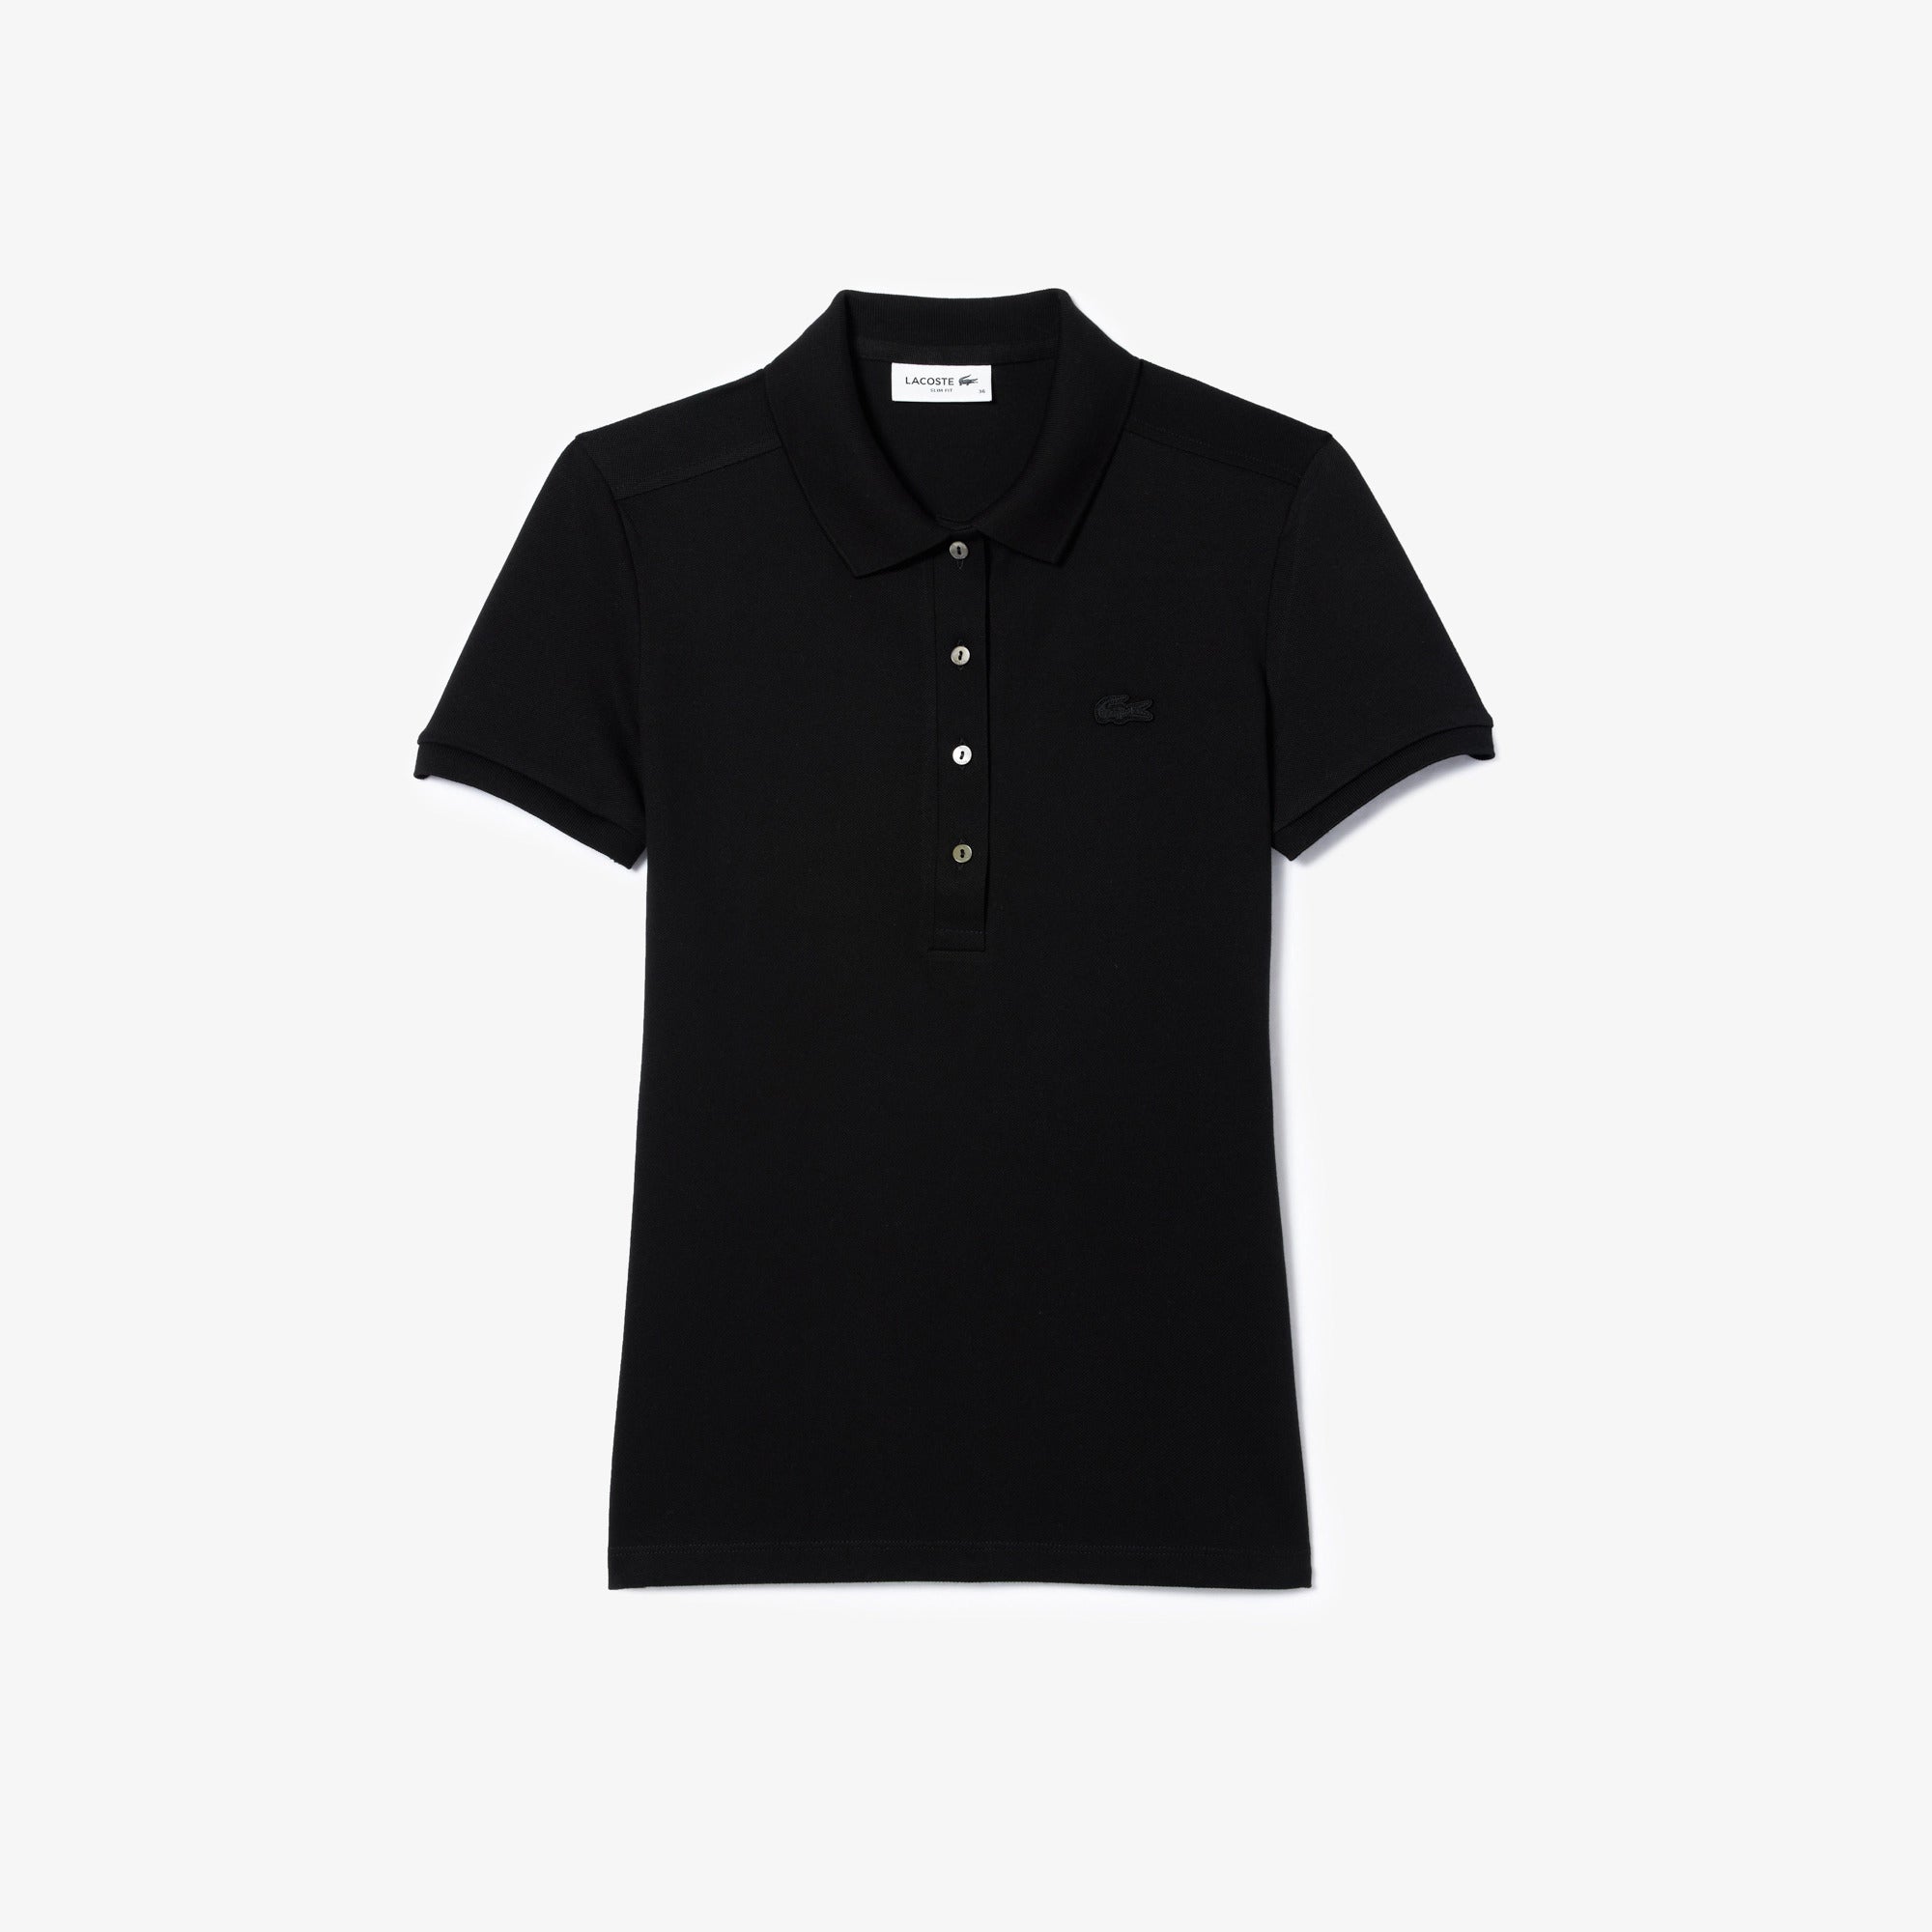 LACOSTE Women's Slim Fit Polo Shirt Black